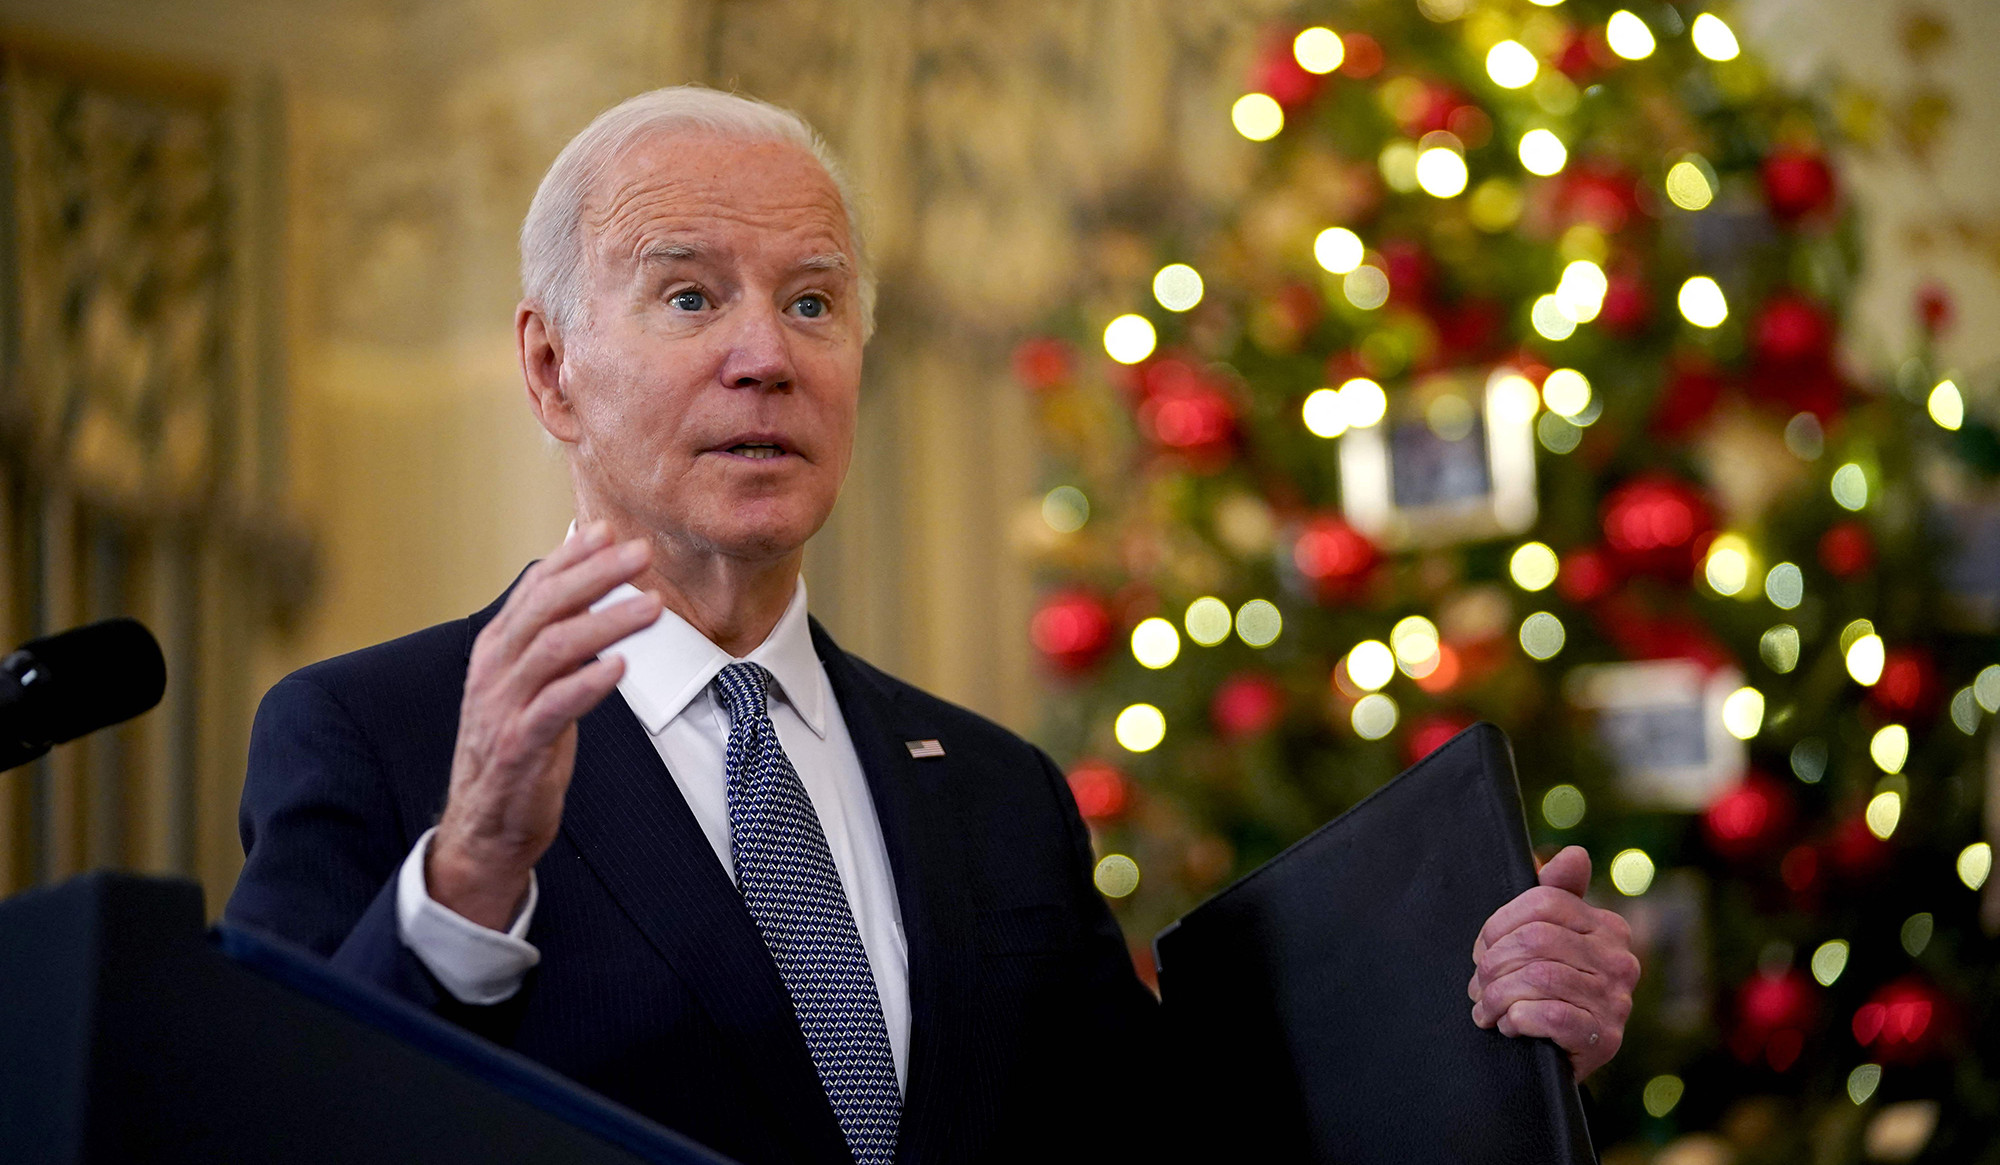 Biden says he will discuss Russia-Ukraine crisis with Putin